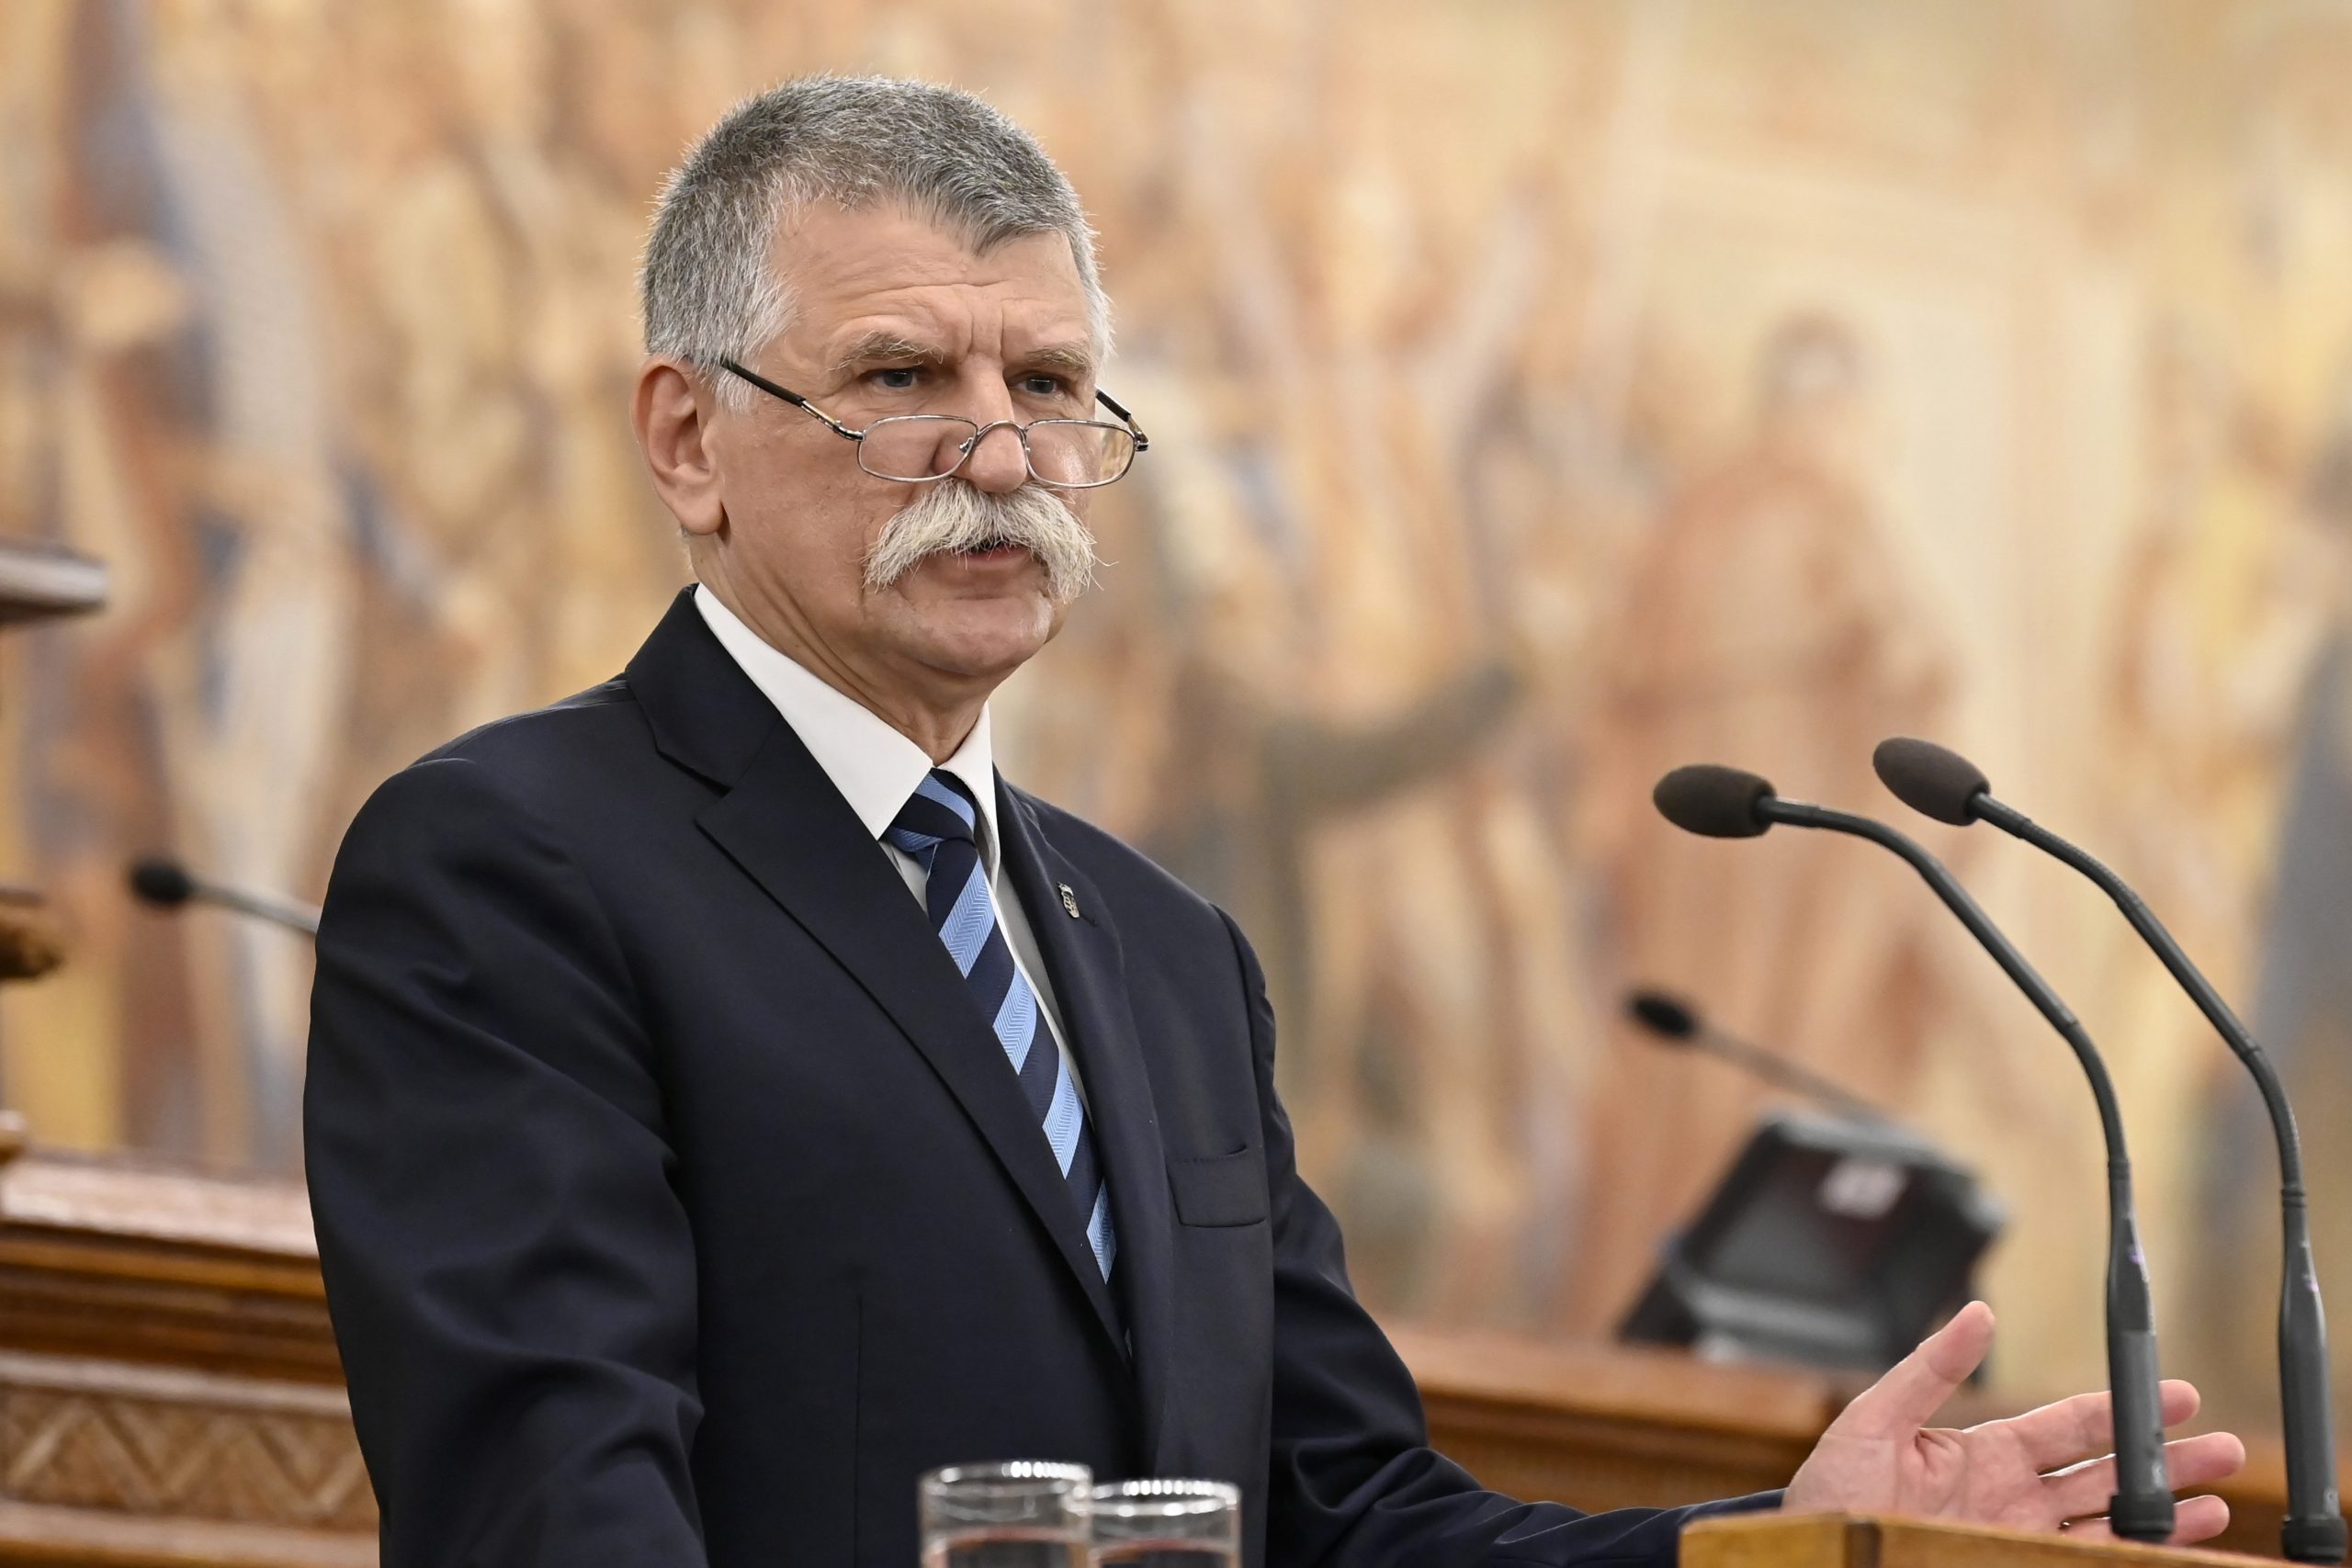 Fidesz's Kövér: Plans to Amend Constitution with Simple Majority 'Cross Line of Criminal Law'